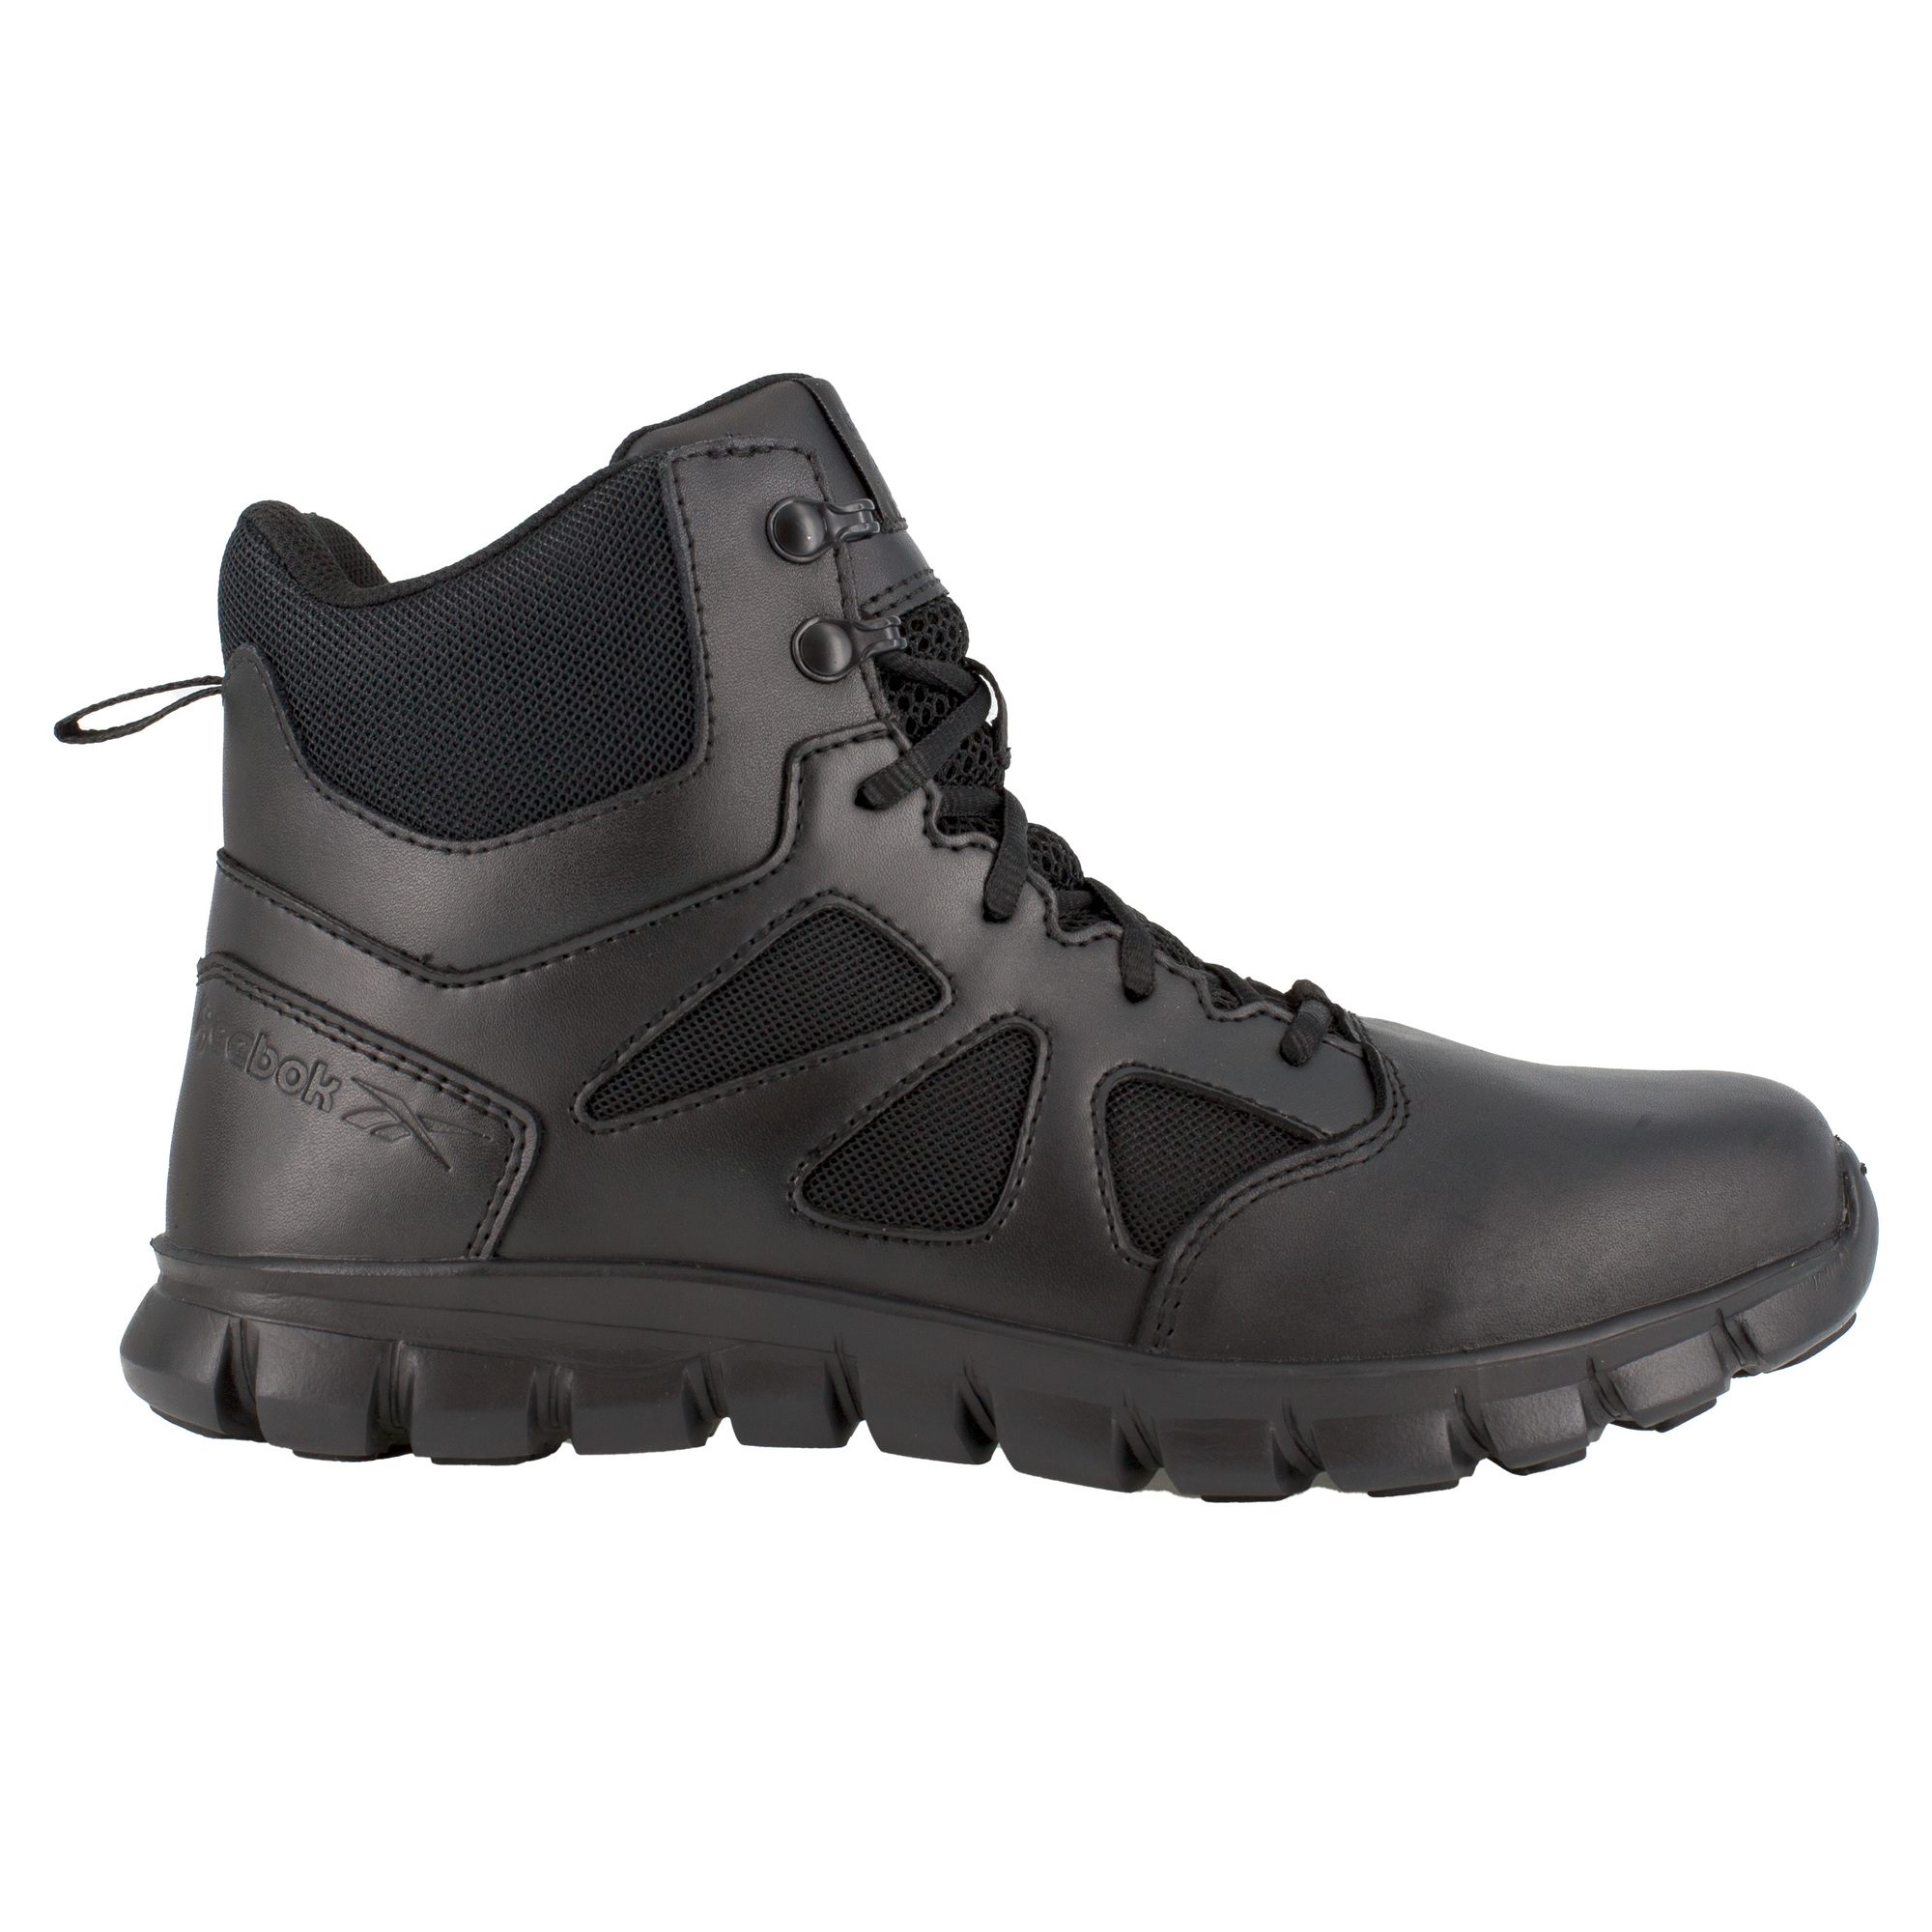 Reebok, 6Inch Tactical Boot w/Side Zipper, Size 11 1/2, Width Medium, Color Black, Model RB086